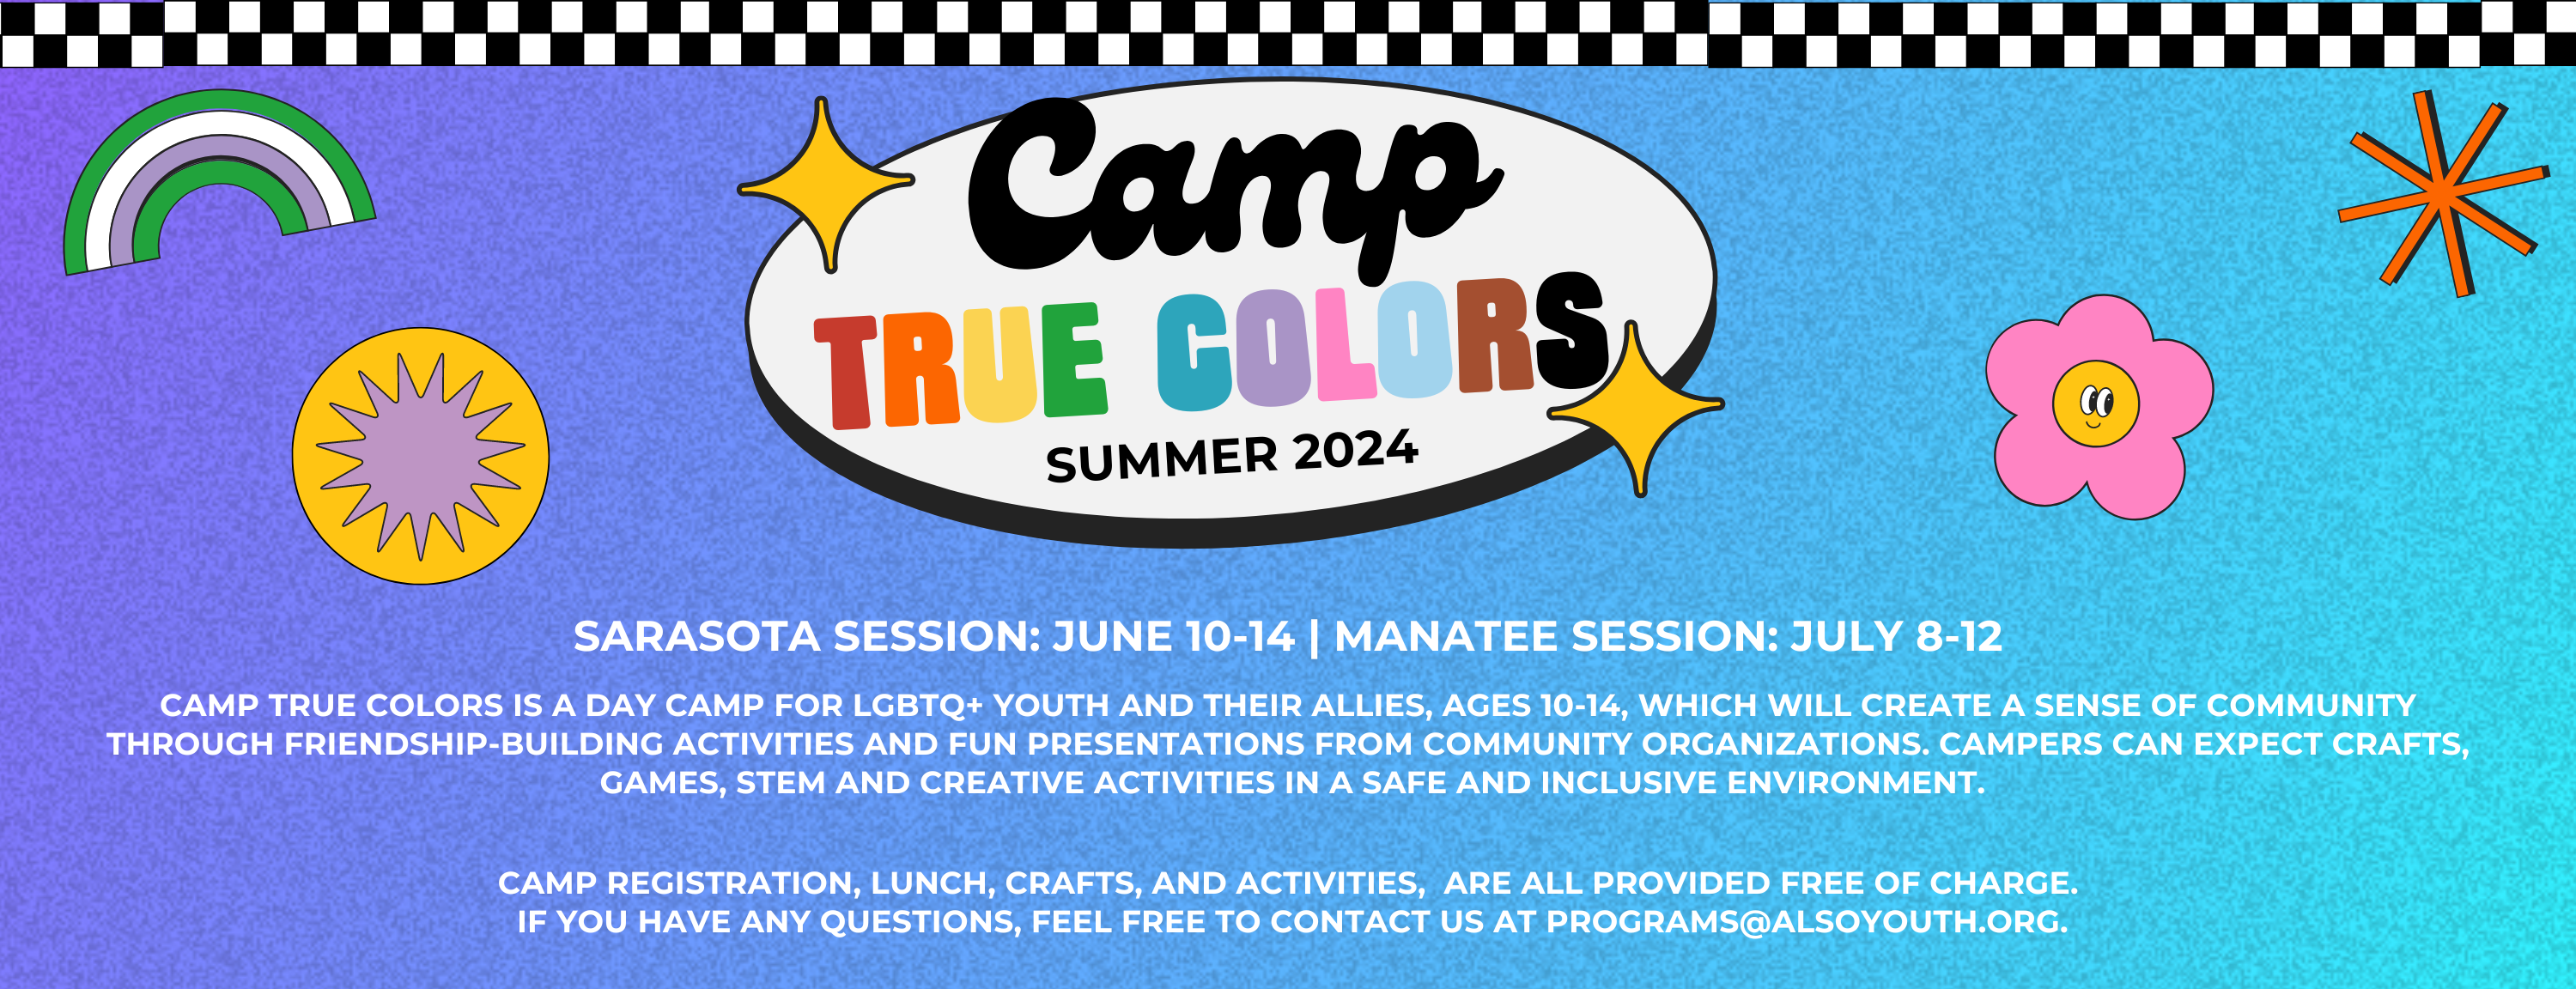 Camp True Colors Banner.png